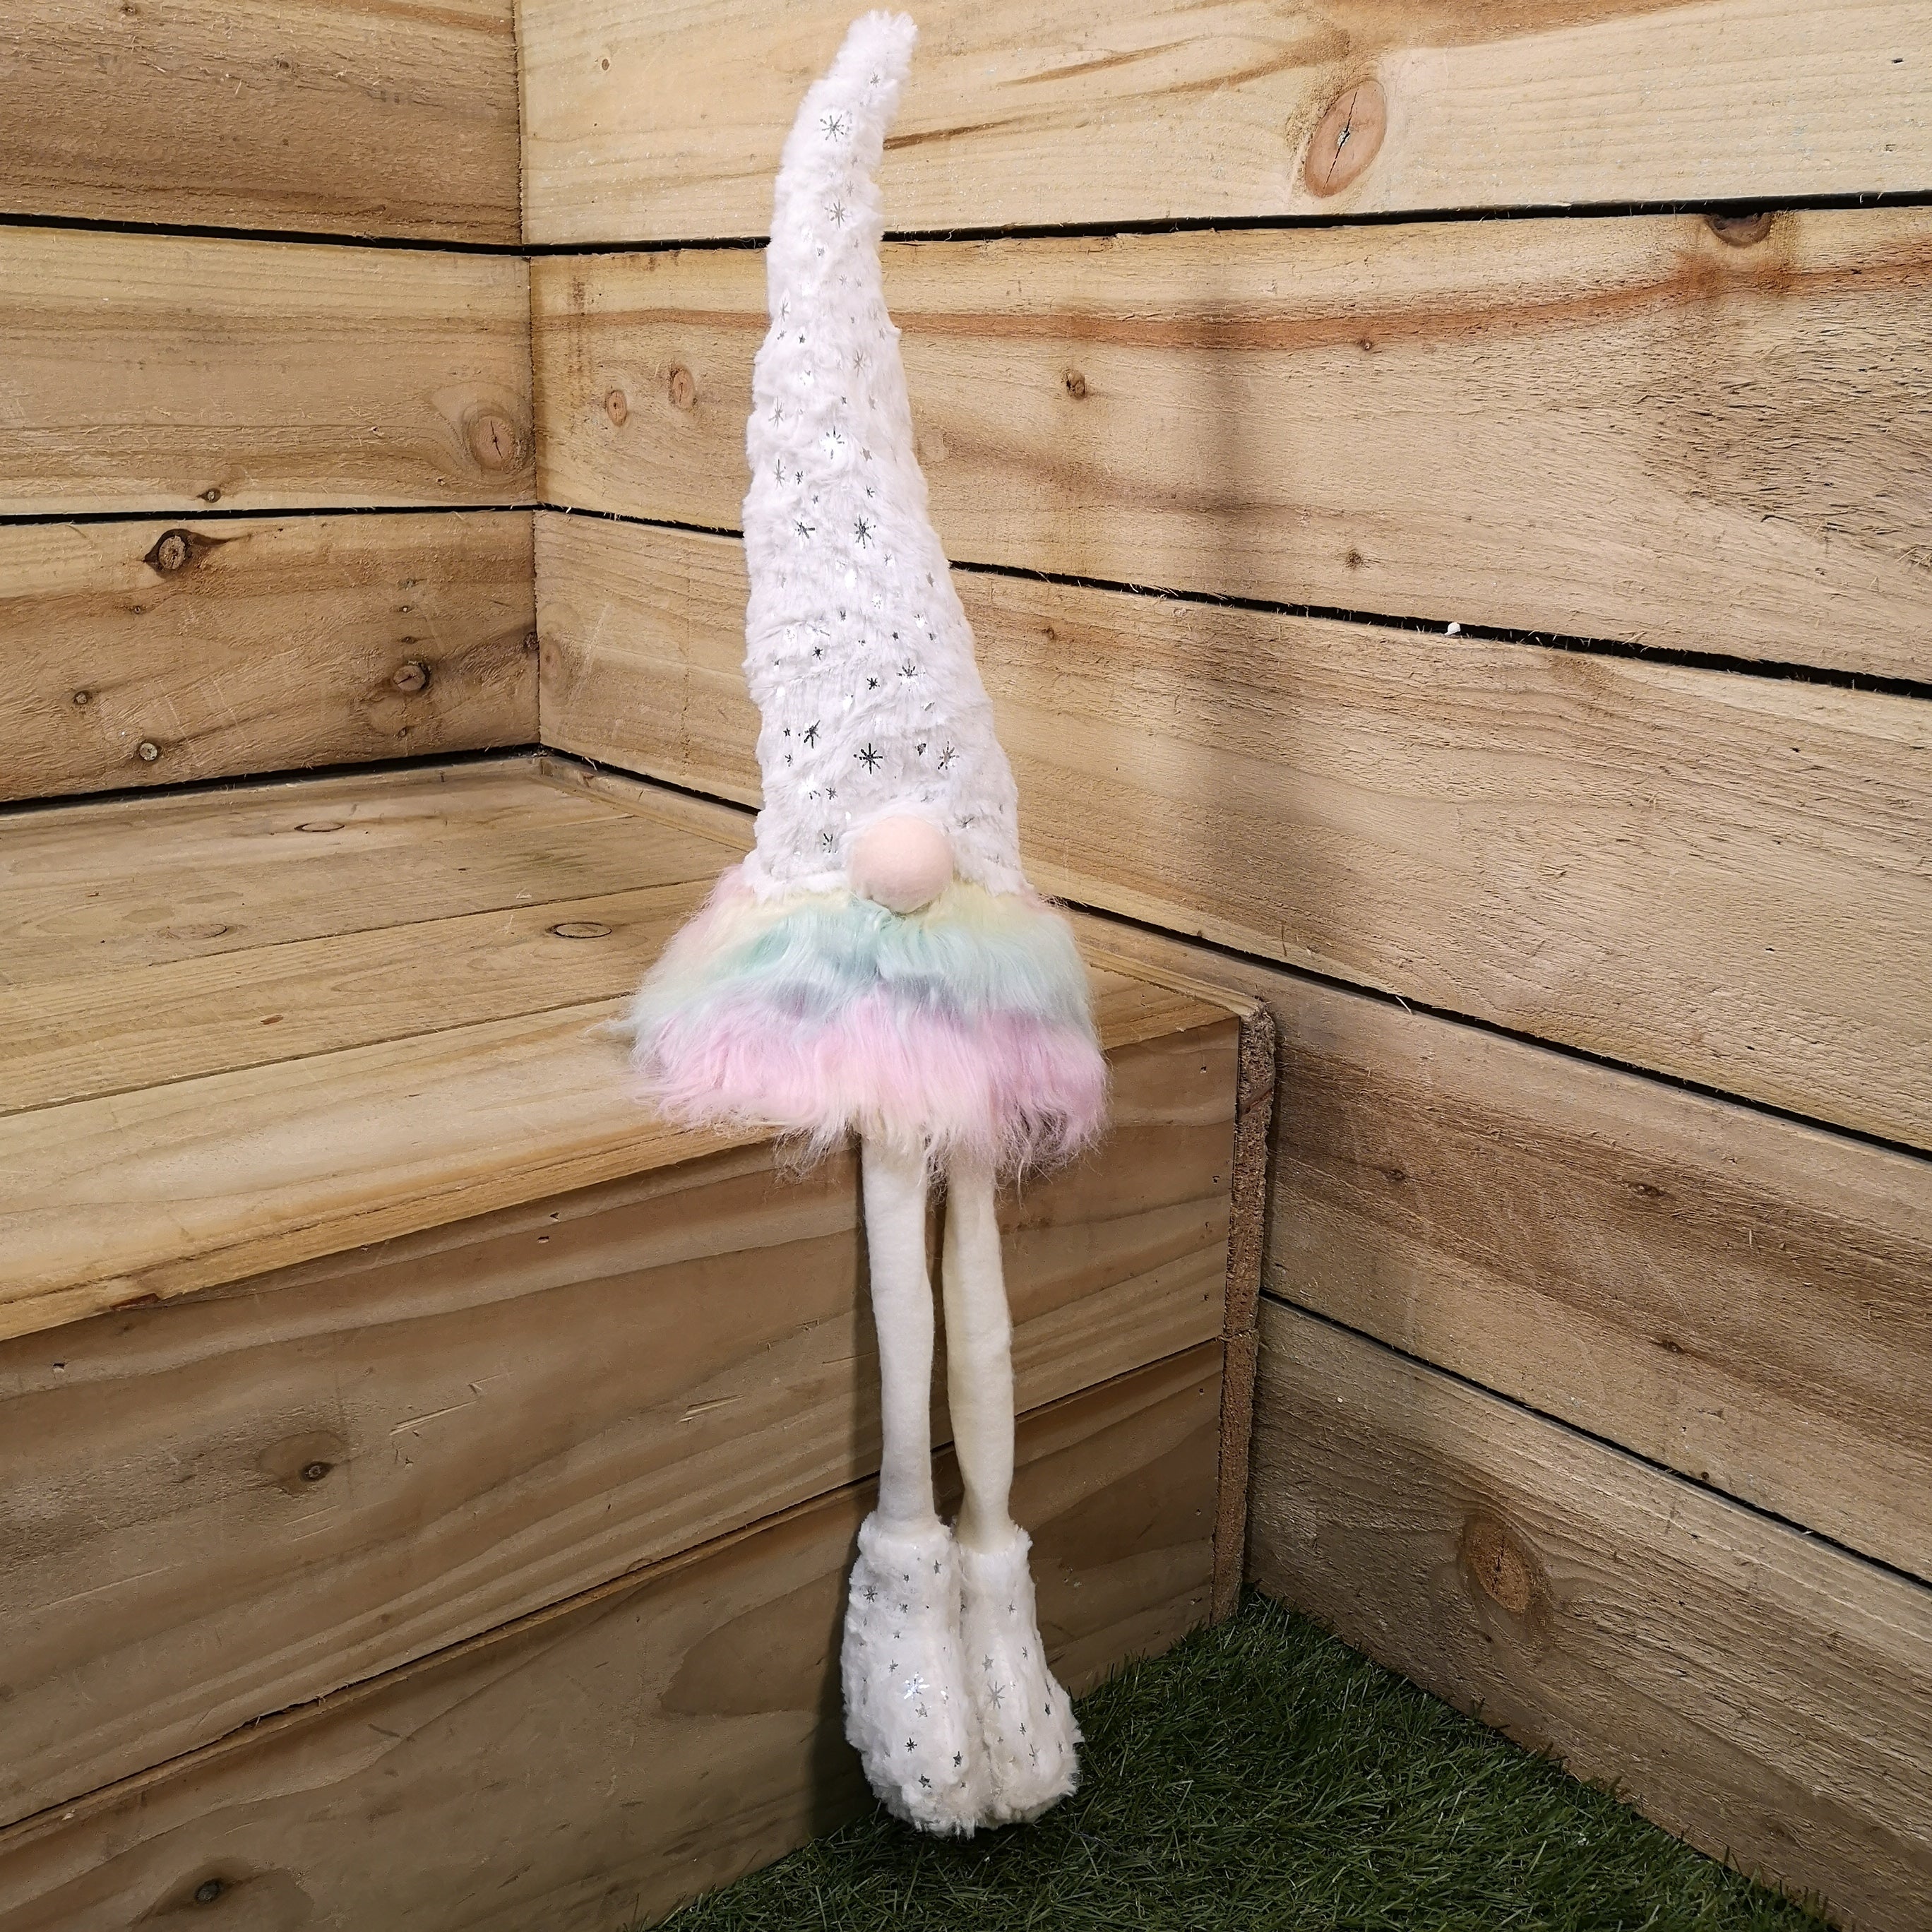 70cm Festive Christmas Rainbow Haired Plush Gonk Dangly Legs & Starry Hat